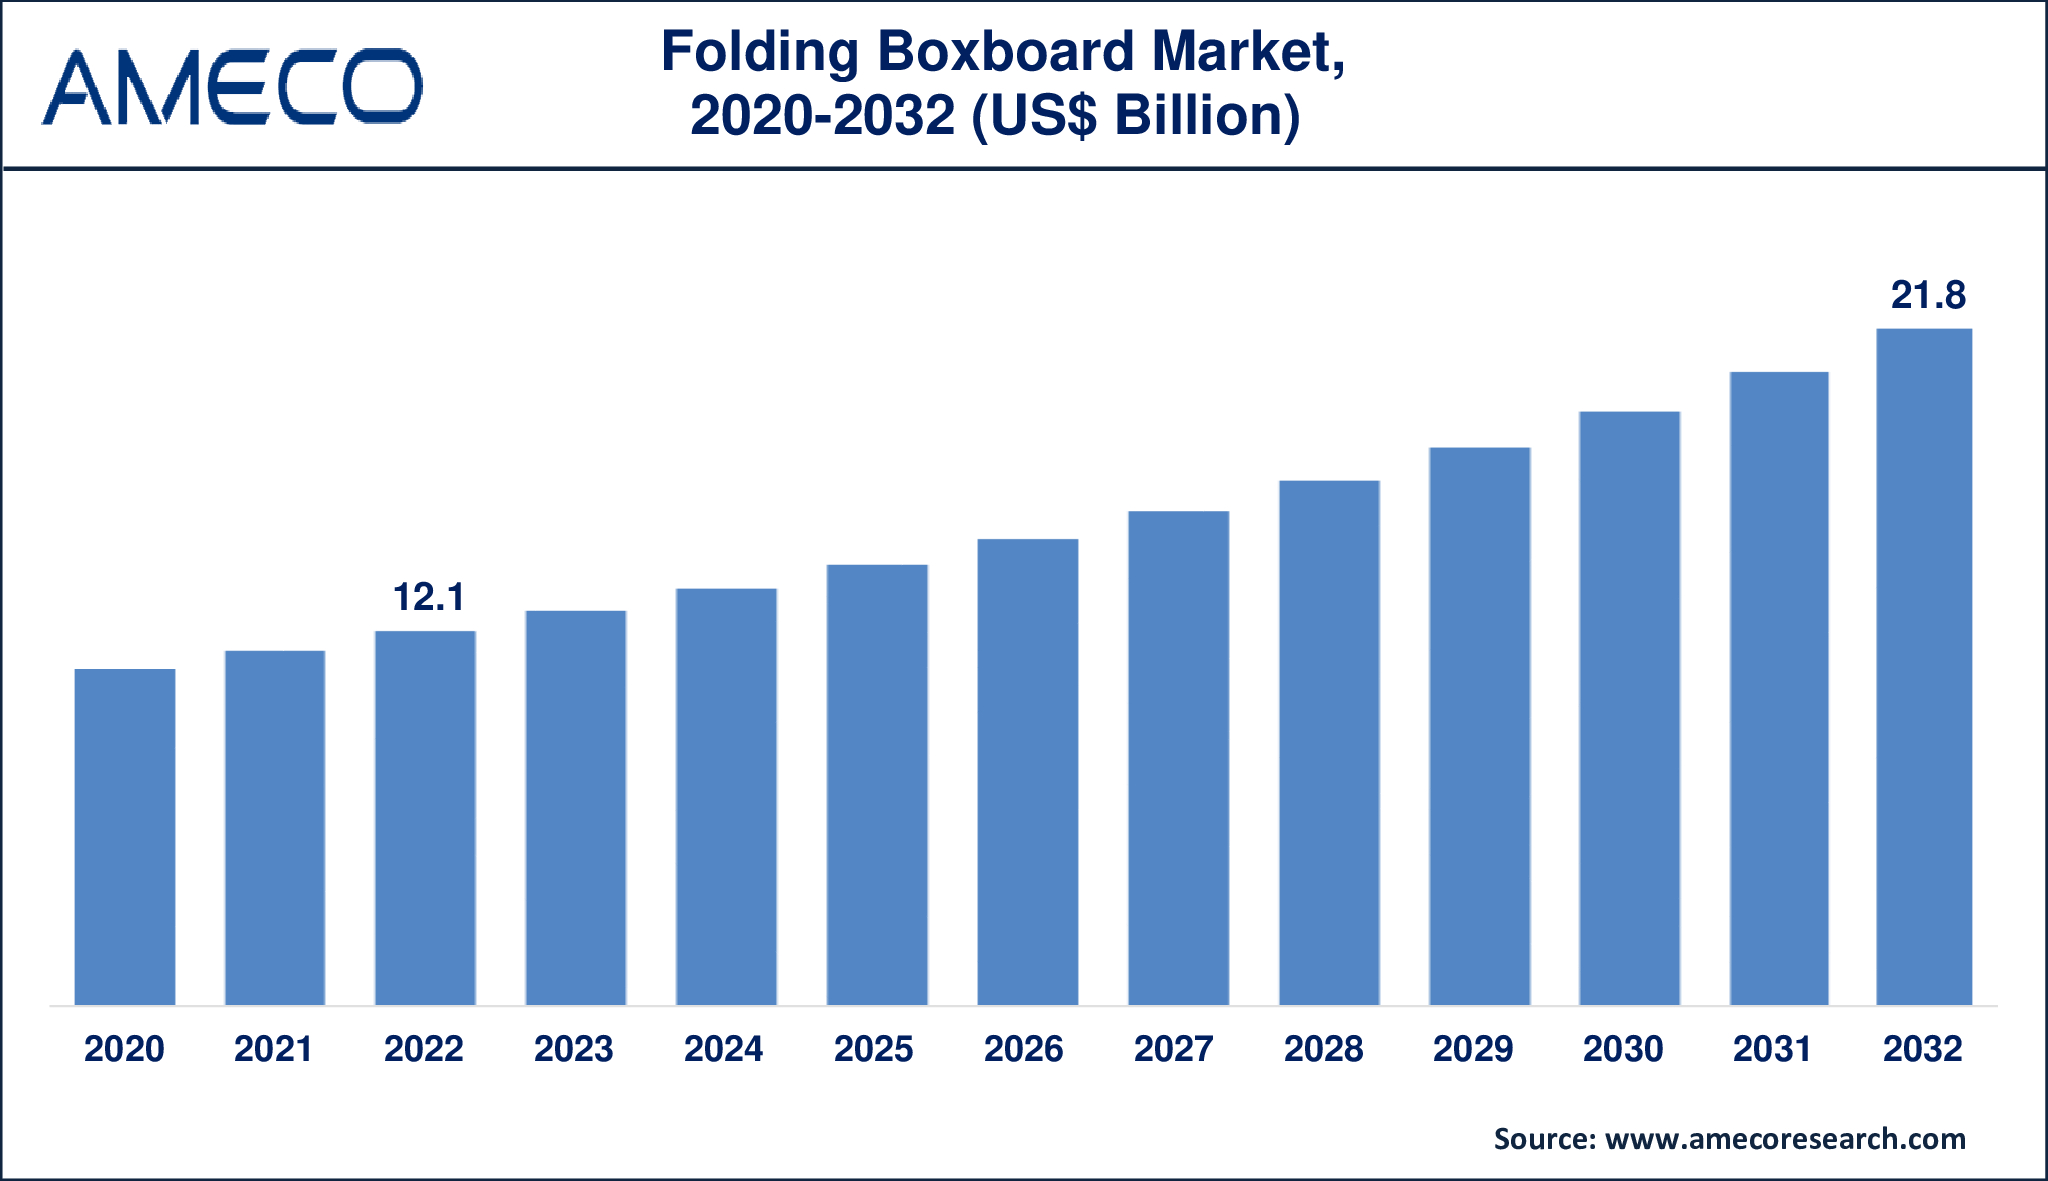 Folding Boxboard Market Dynamics